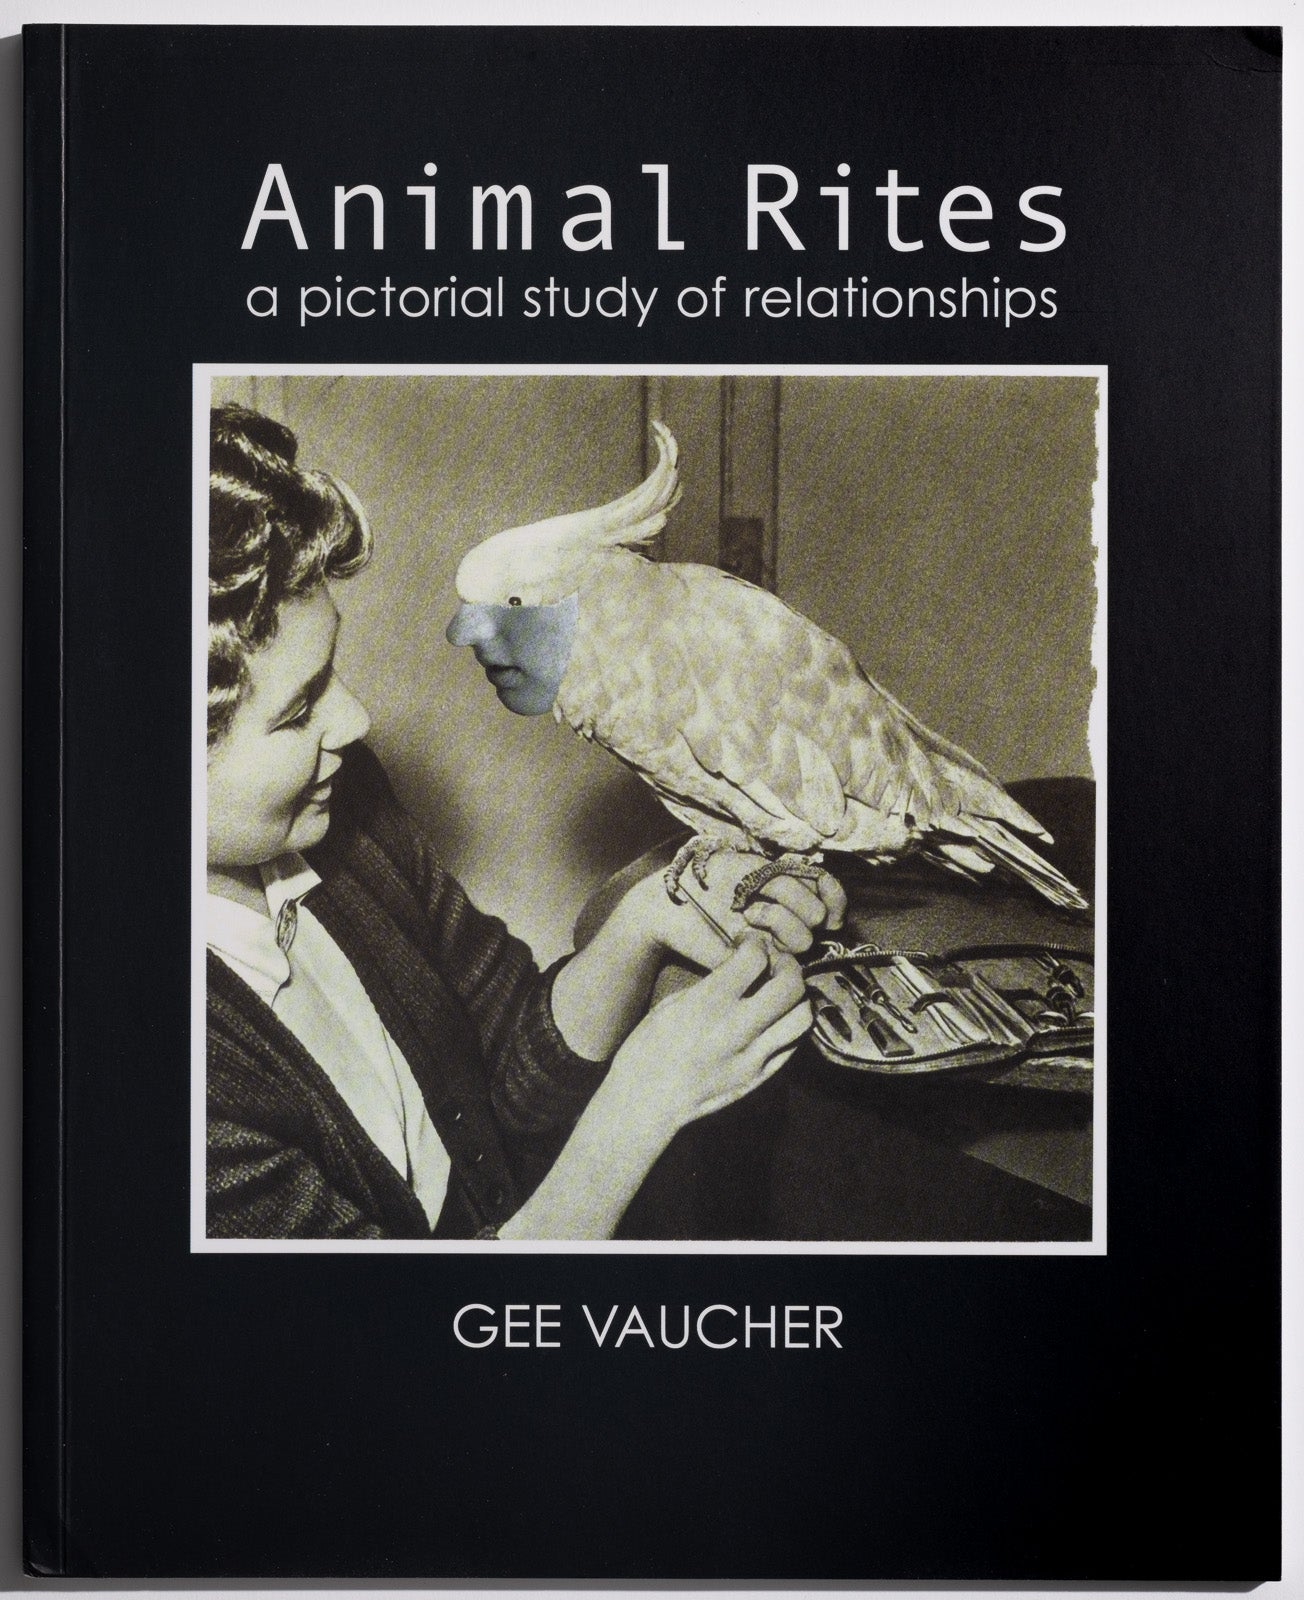 Gee Vaucher: Animal Rites [softcover]